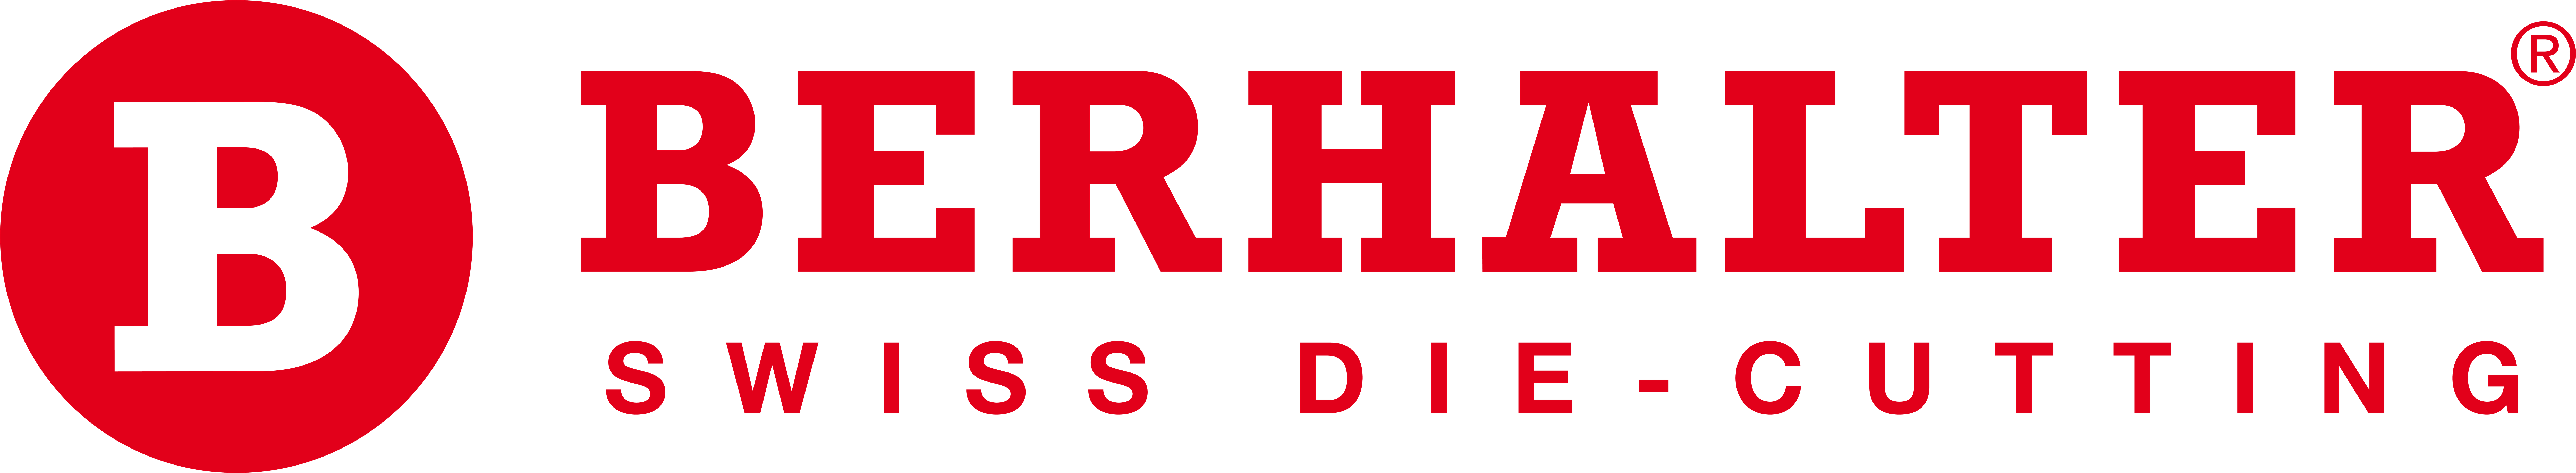 Logo BERHALTER Swiss Die-Cutting_horizontal_rot_high resolution_RGB